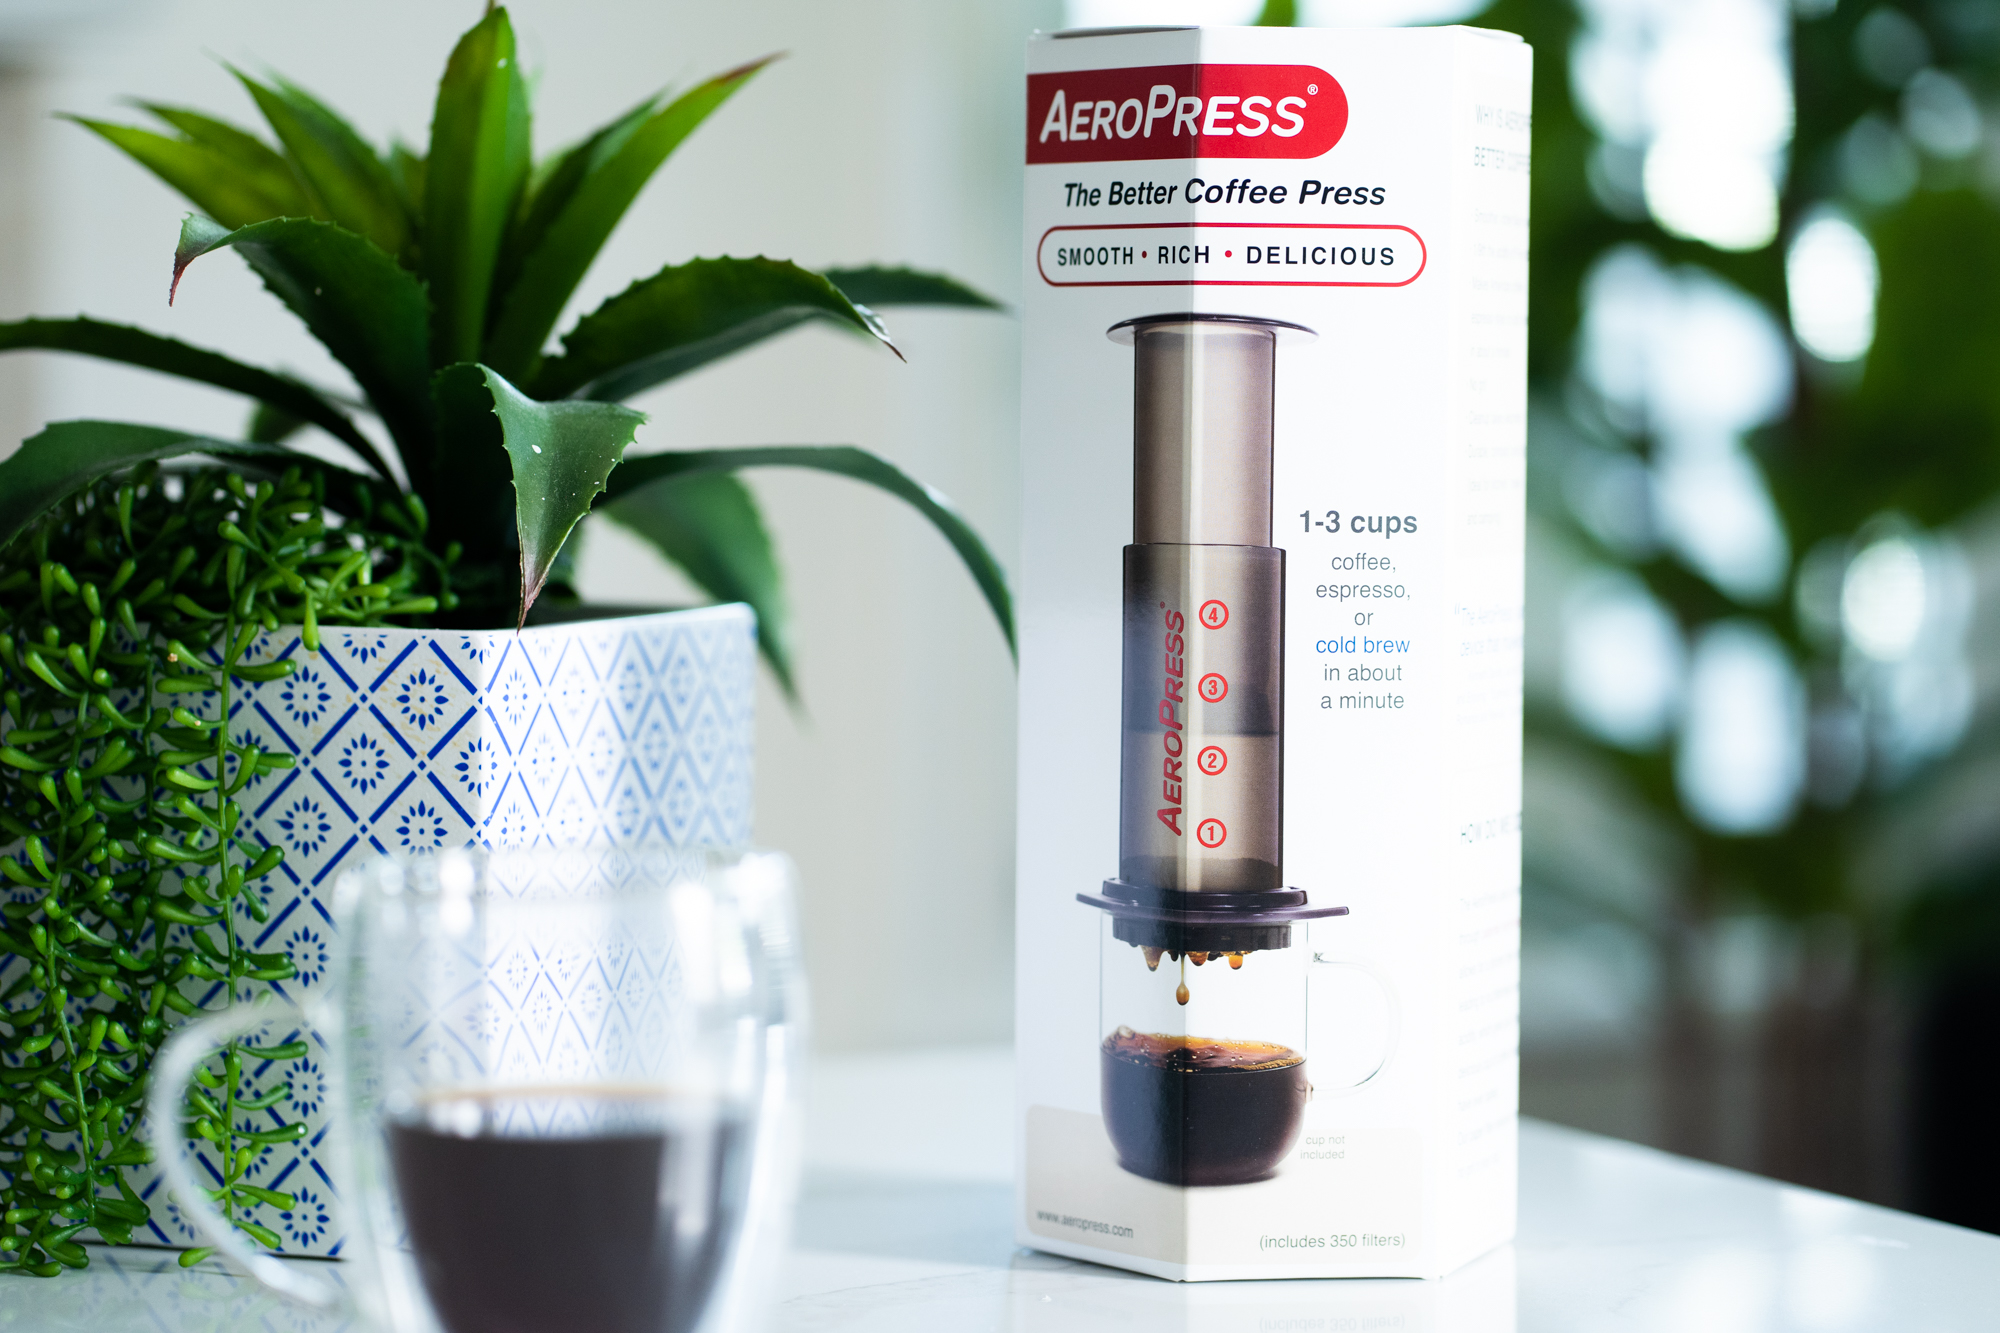 AeroPress Original Coffee Press review: Smooth, rich brew in under a minute